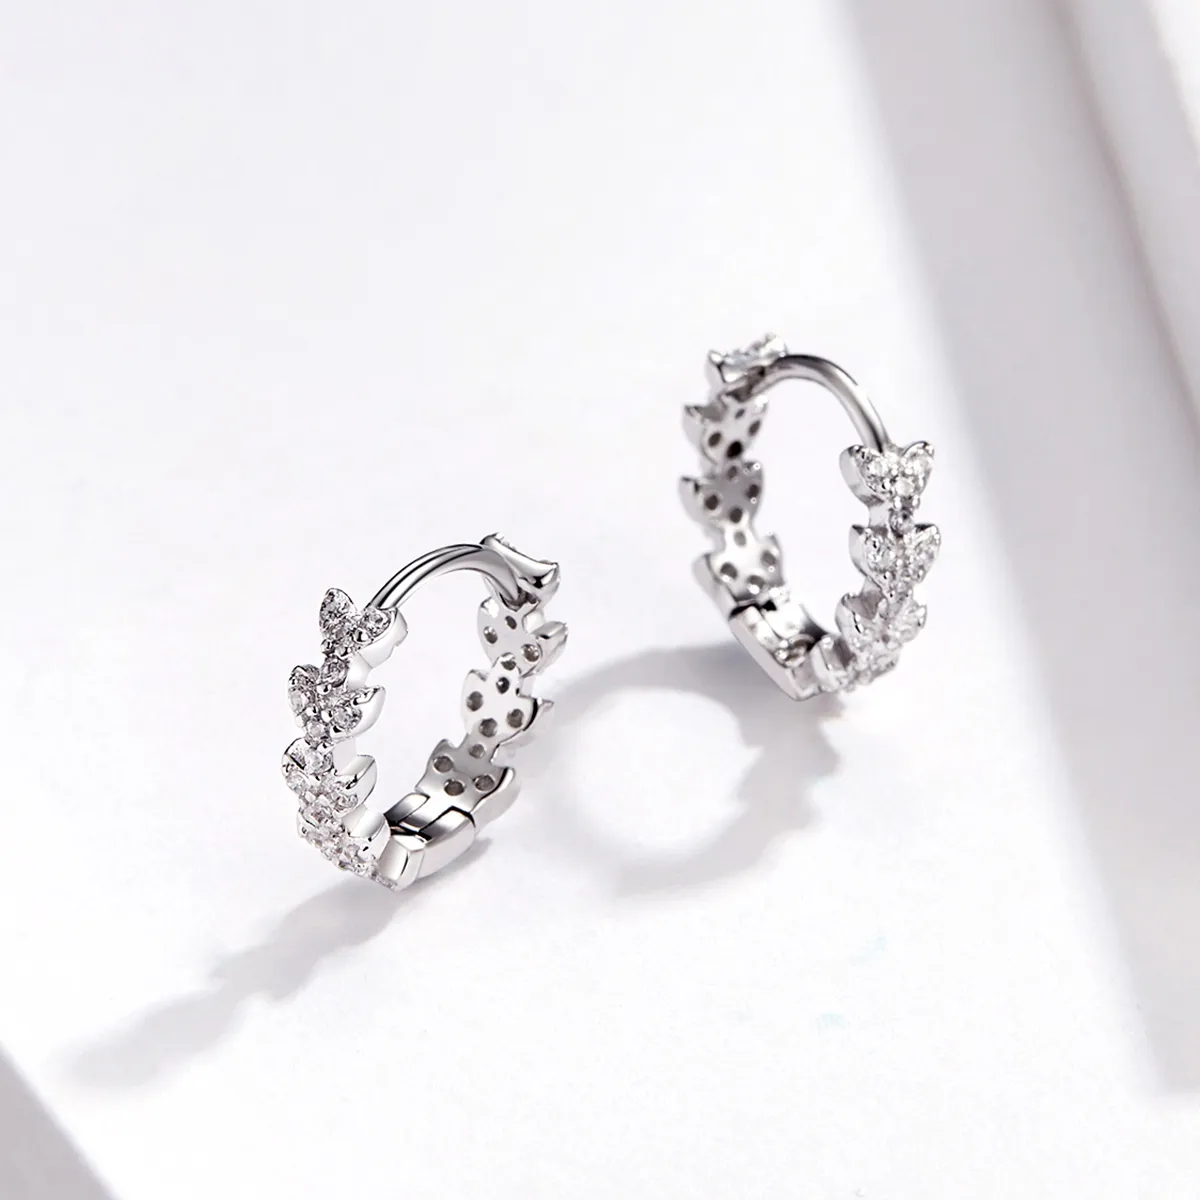 Pandora Style Silver Shiny Leaf Hoop Earrings - BSE150